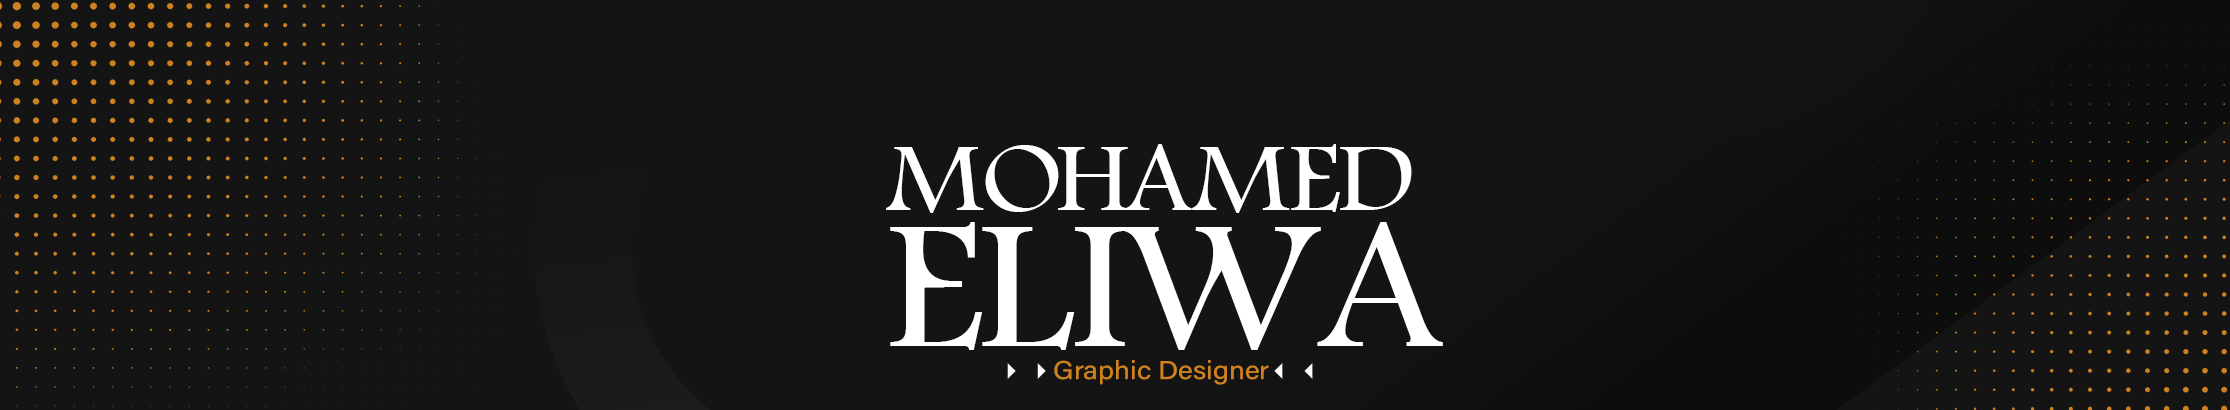 Mohamed Eliwa's profile banner